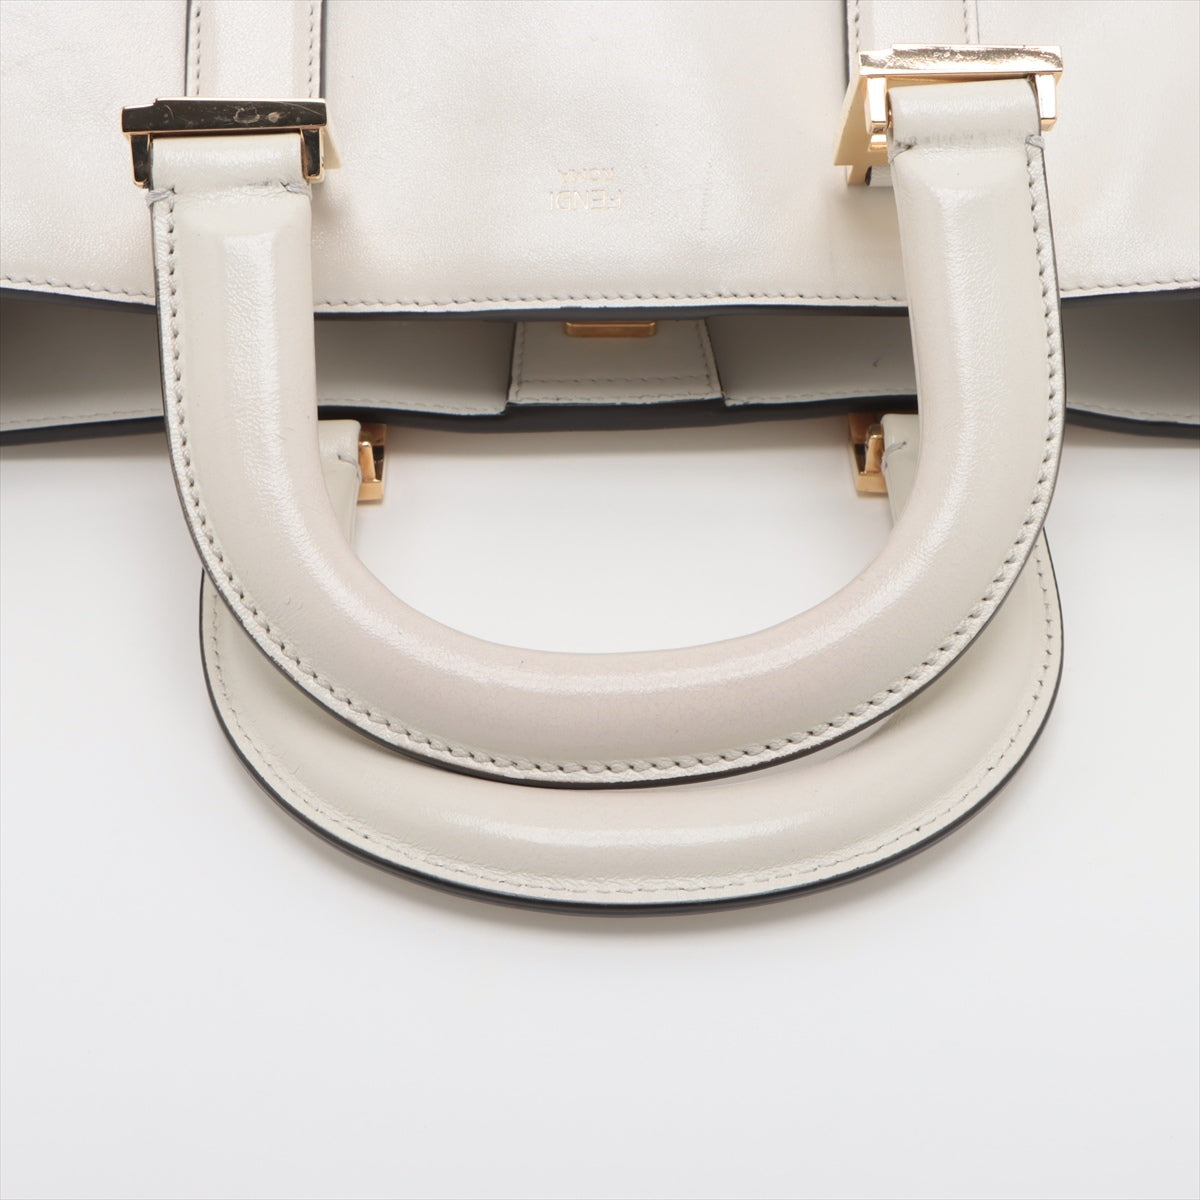 Fendi FF tote Small Leather 2 Way Handbag White 8BH367